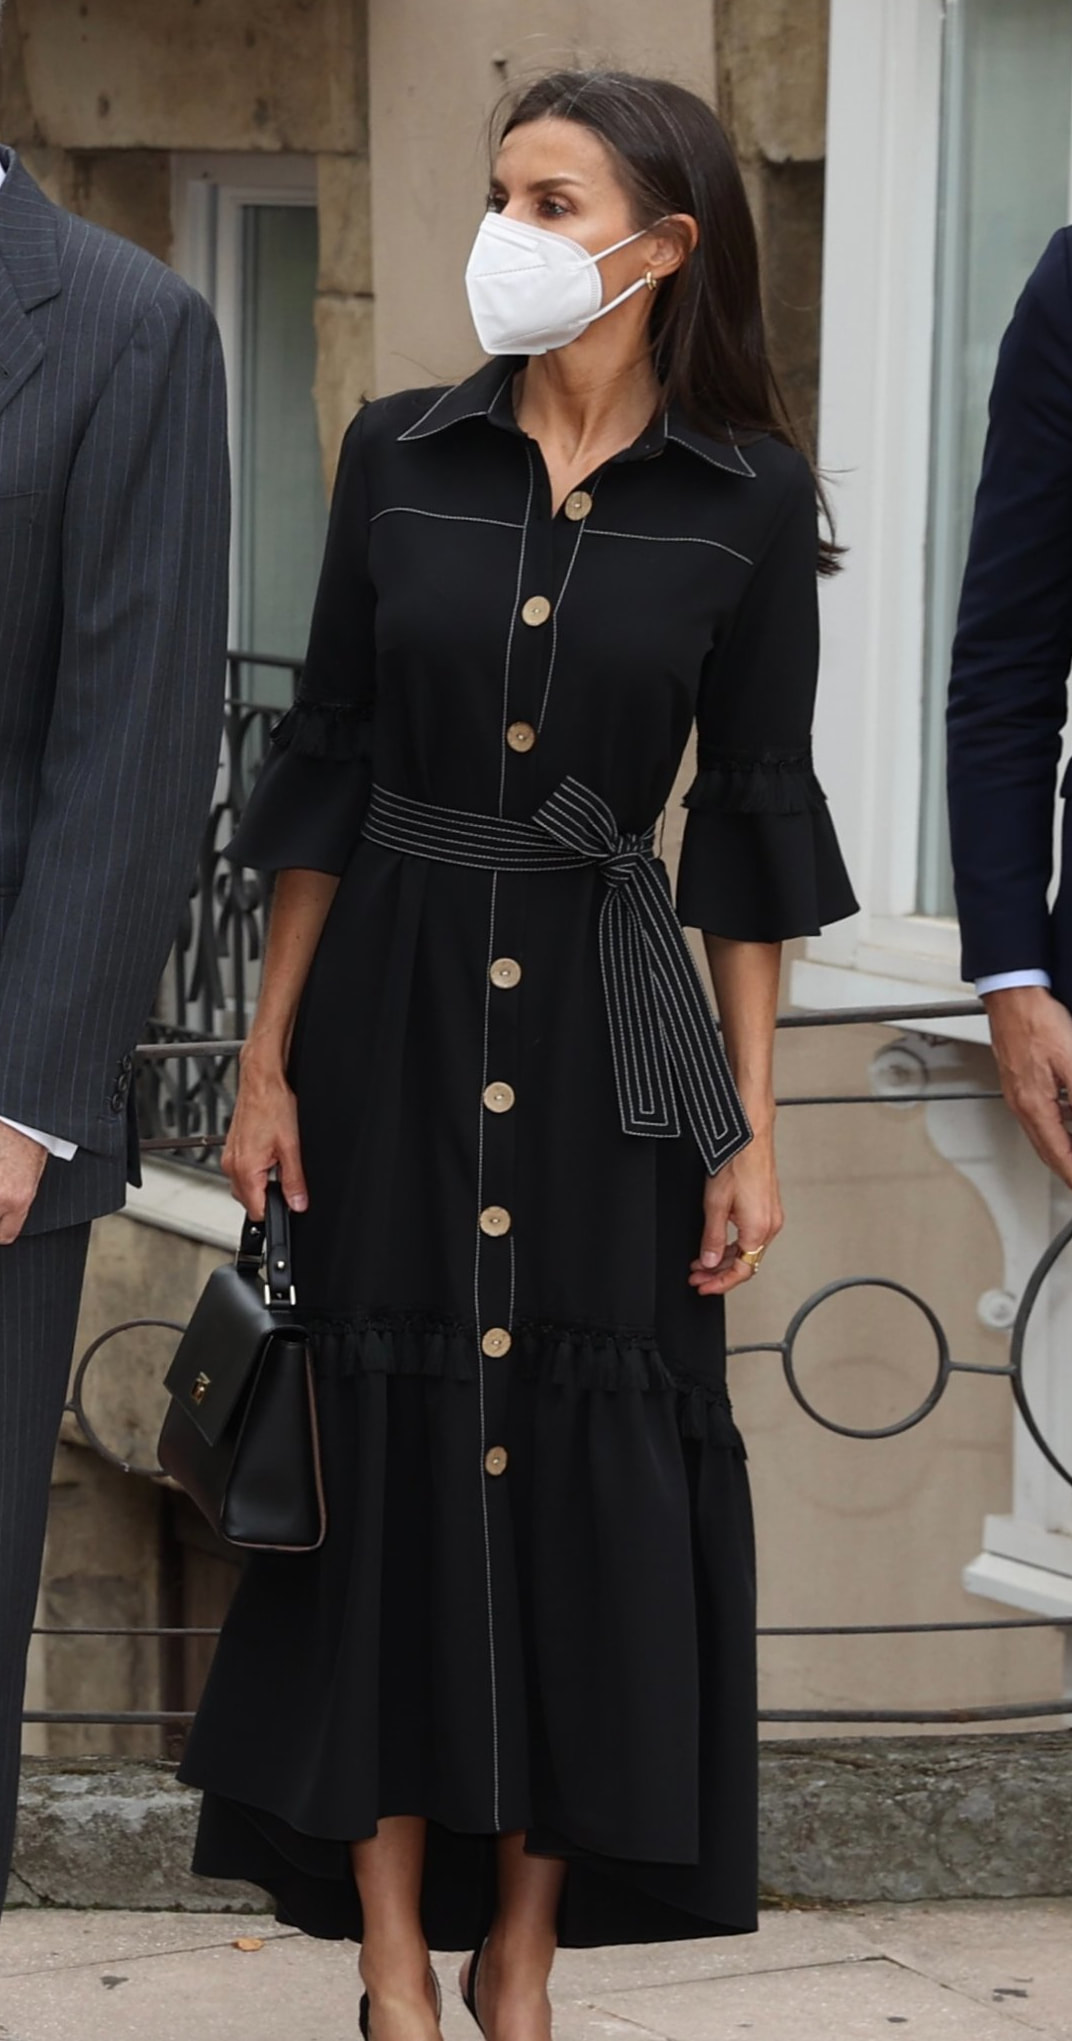 Queen Letizia wears Leyre Doueil Drago black collared dress